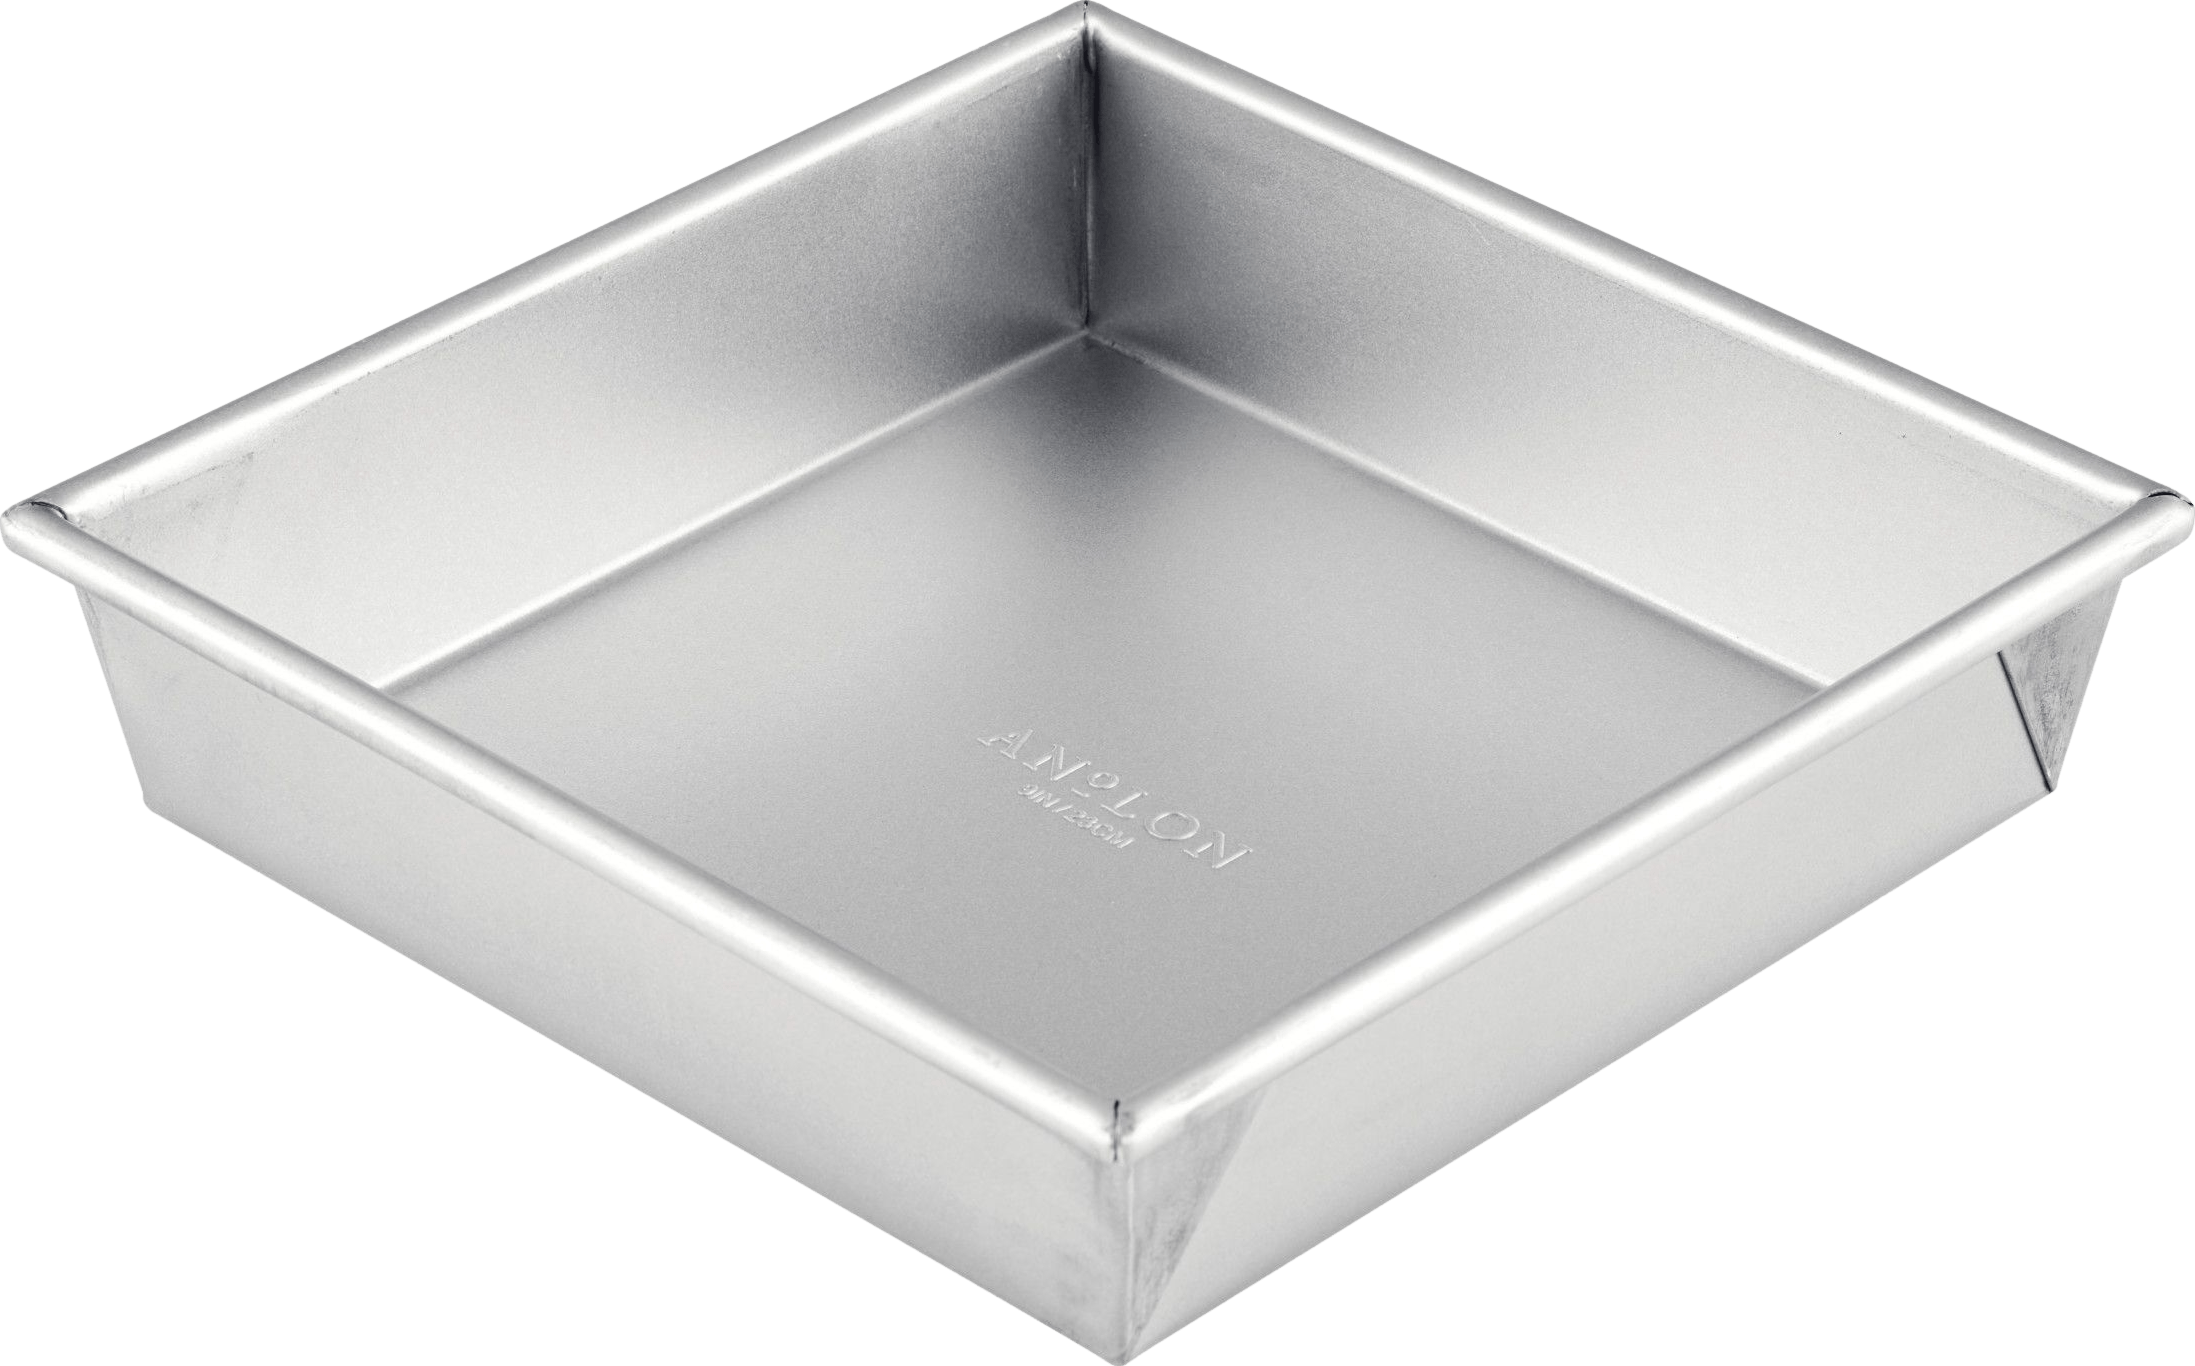 Anolon Pro Bake Bakeware Aluminized Steel Square Cake Pan, 9-Inch, Silver